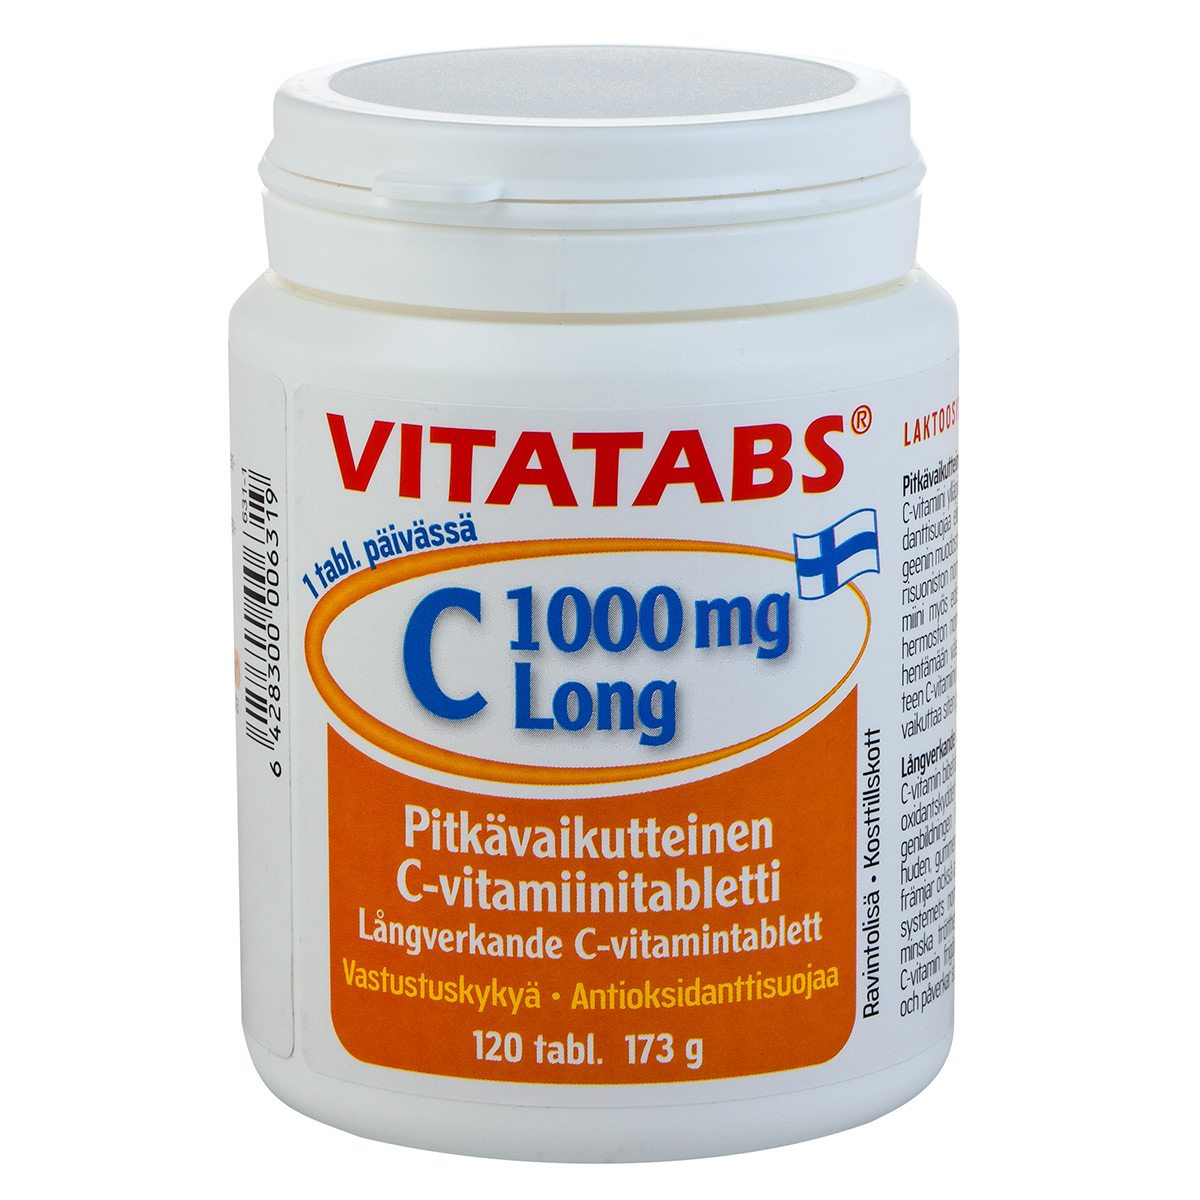 Витамин c 1000. Витатабс витамины из Финляндии. Витатабс витамин д3 таб. Финские витамин д3 Vitatabs. Витатабс в12 финские витамины.